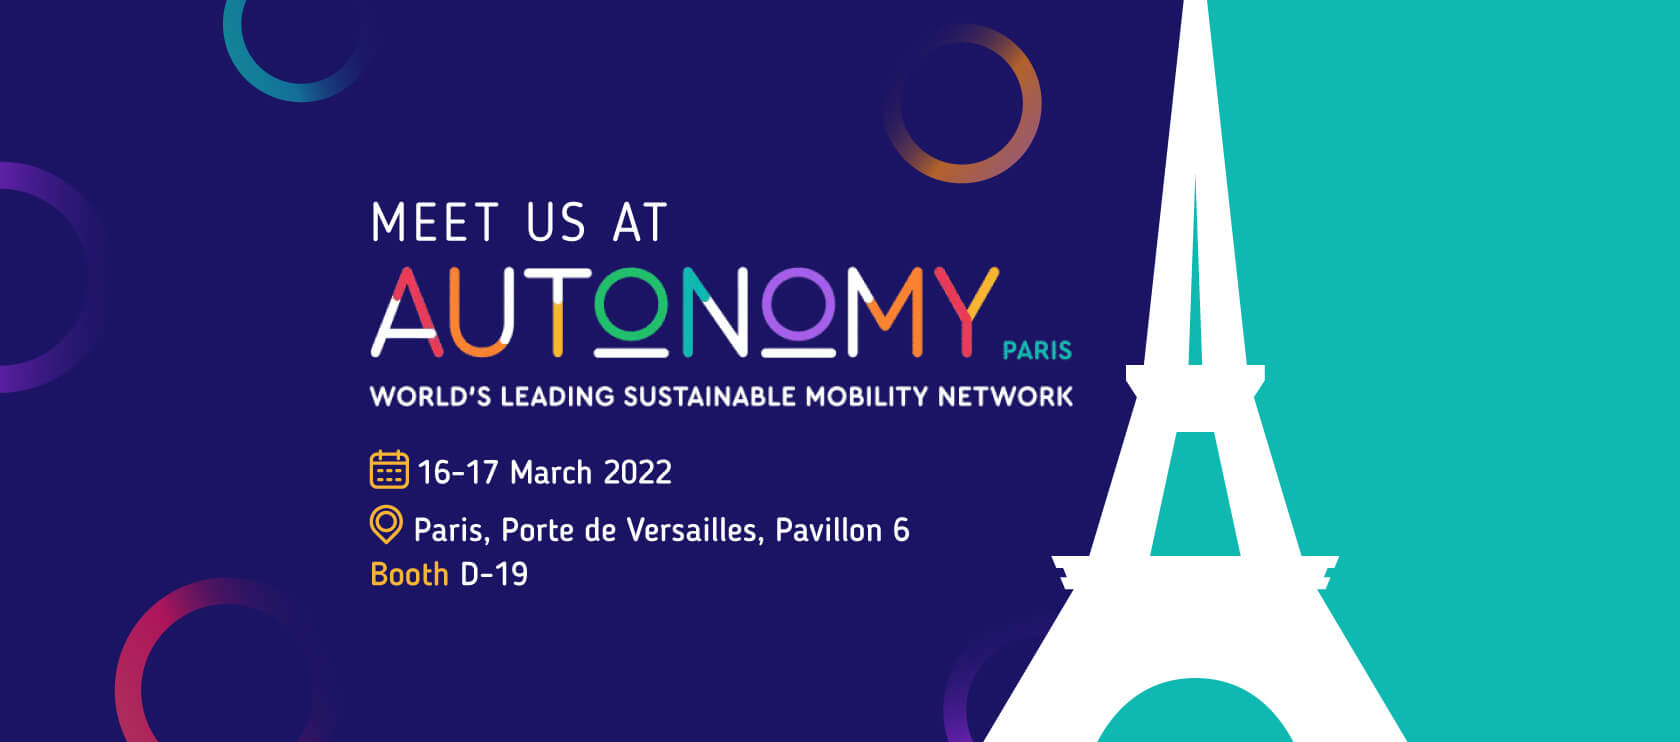 Farplas Automotive and Fark Labs featured as industry partner of Autonomy Paris 2022